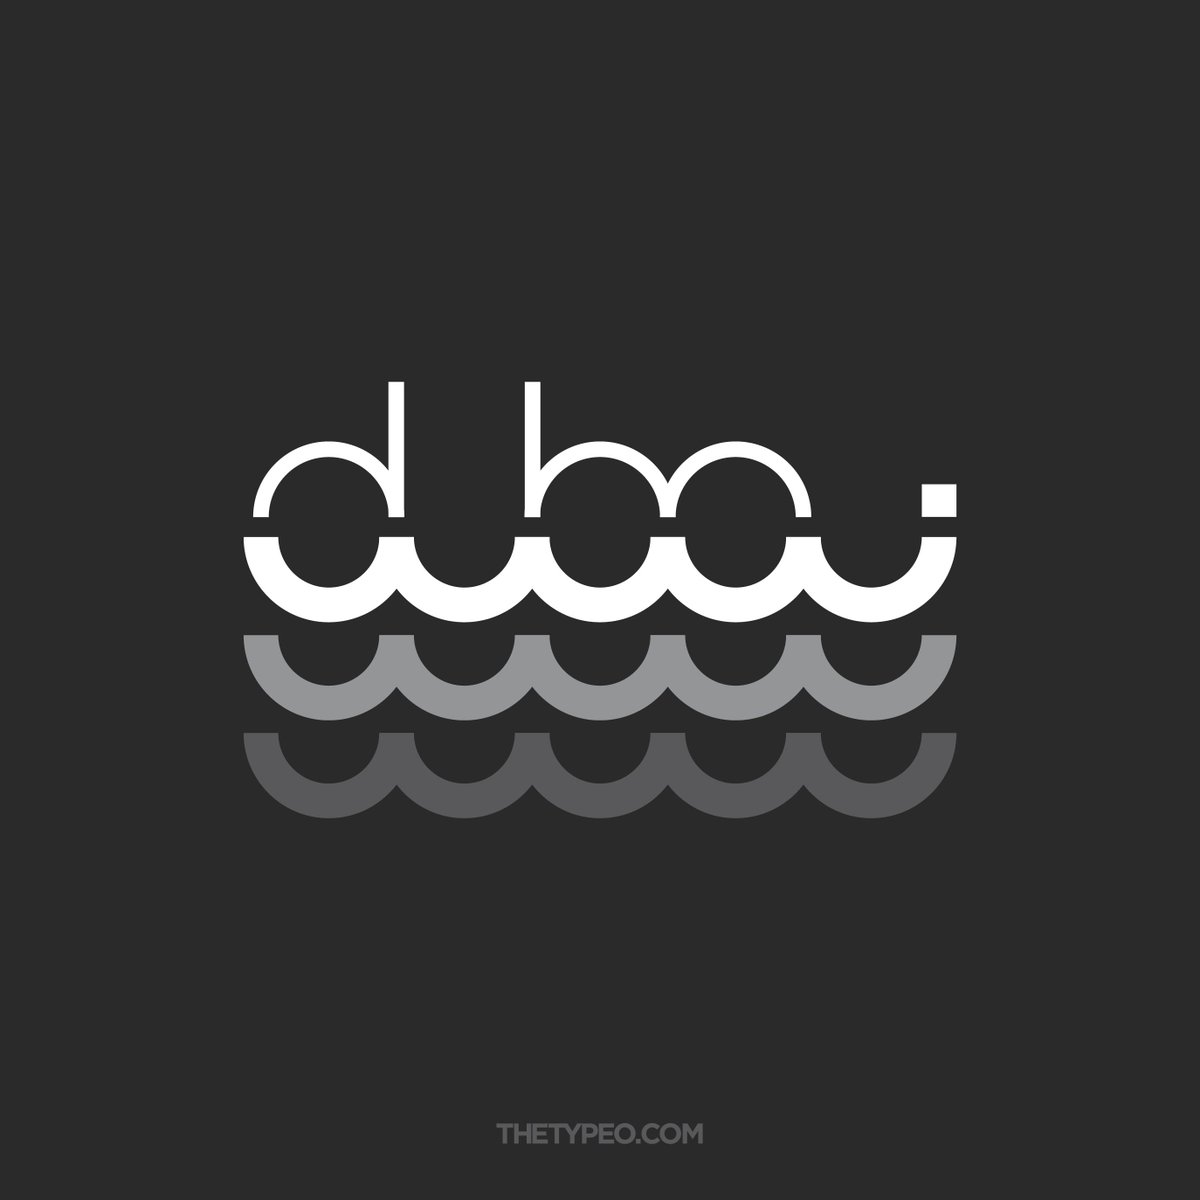 #dubairain 
.
.
.
.
#Dubai #Dxb #urbanflooding #typography #wordplay #expressivetypography #owaisriaz #thetypeo